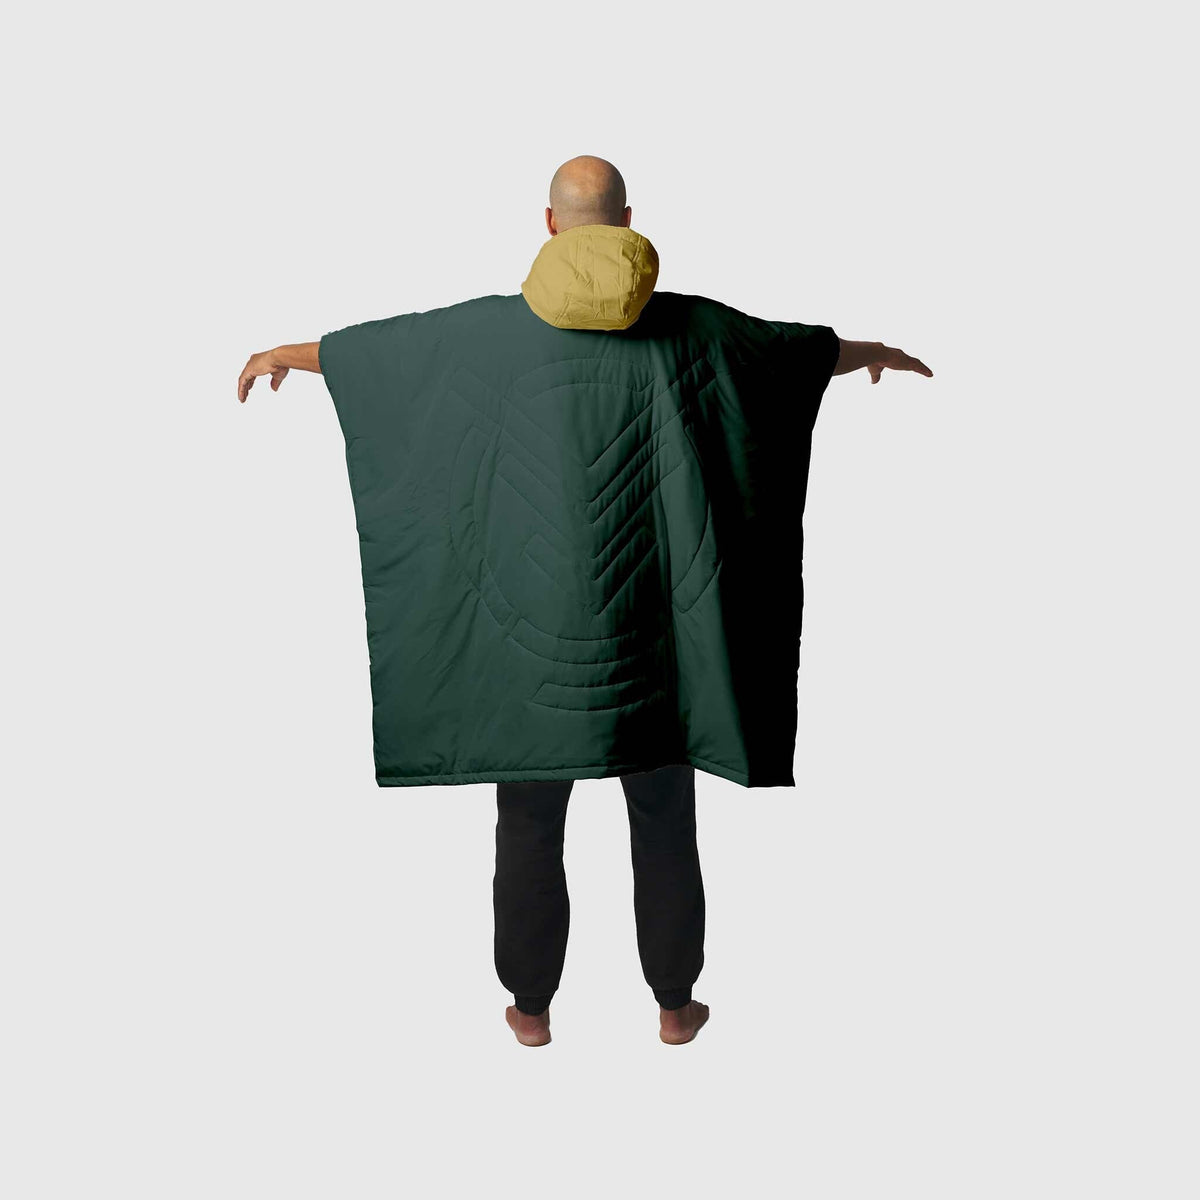 VOITED Trooper Outdoor Premium Poncho-Blanket - Green Gabels / Dusty Sand Blankets VOITED EU 